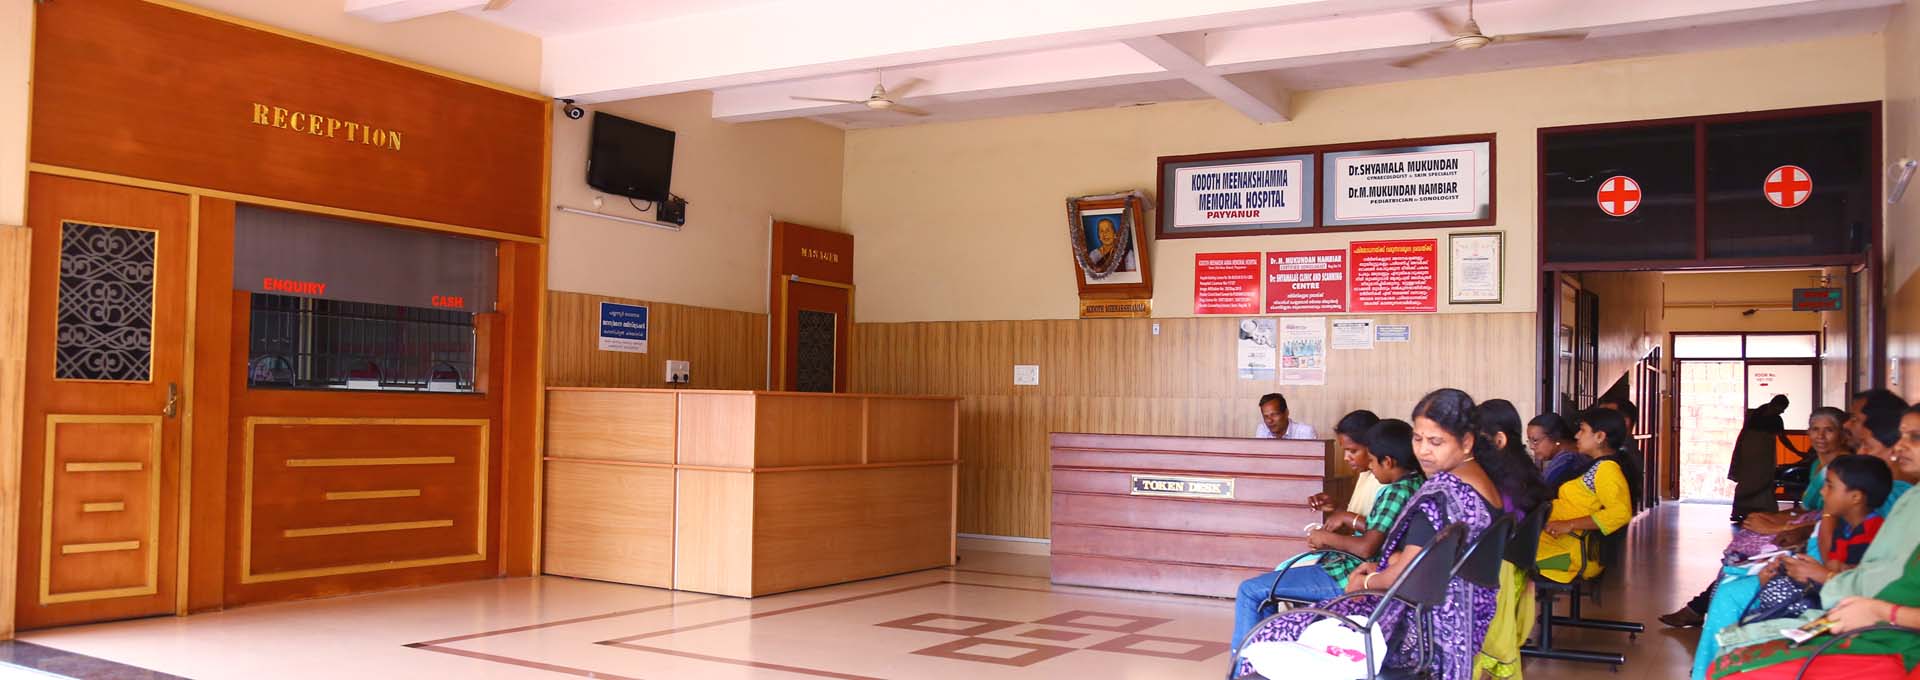 Meenakshiamma Memorial hospital Front Desk